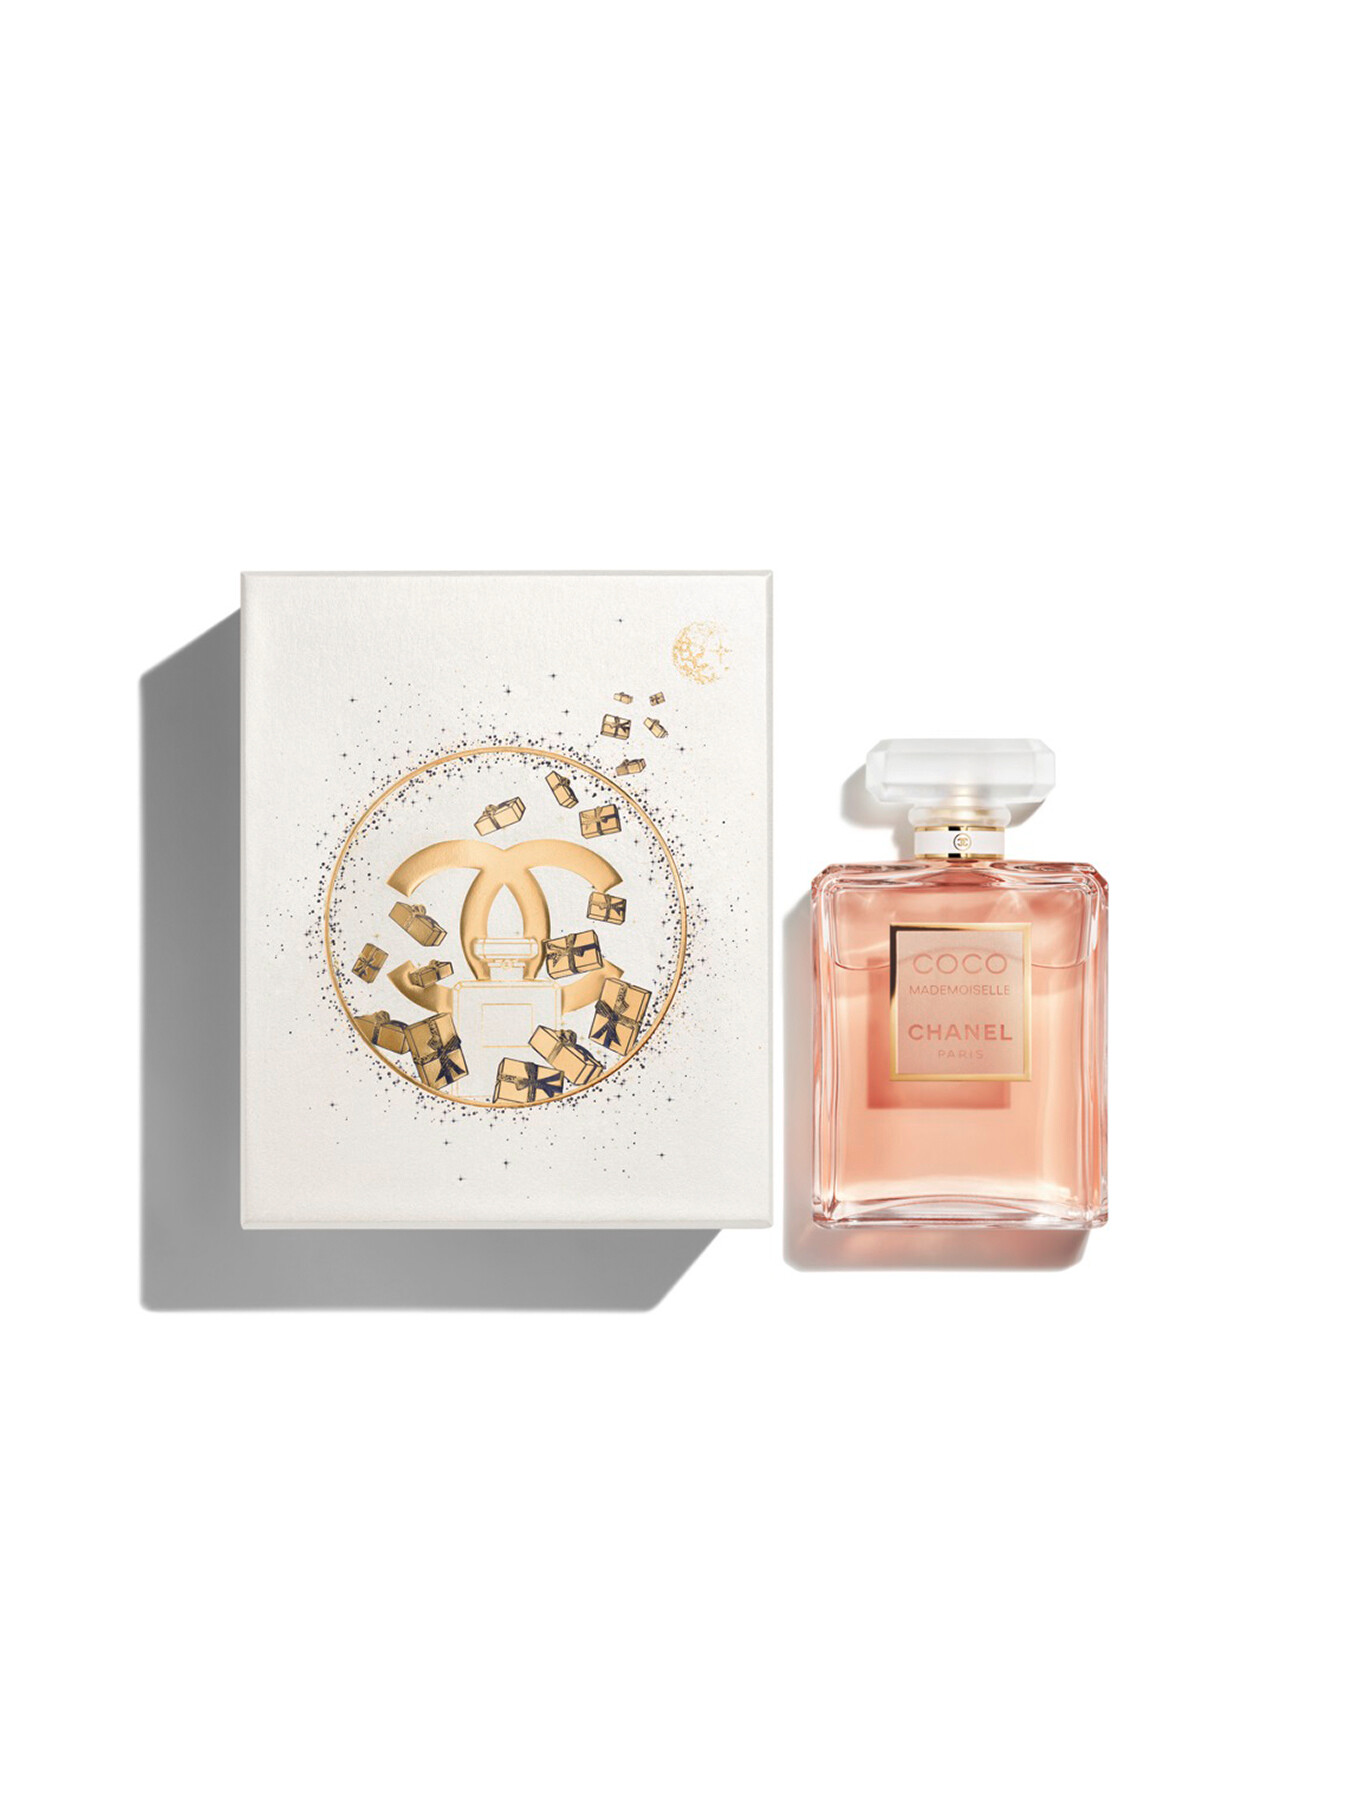 Chanel Coco Mademoiselle Eau De Parfum 100ml With Gift Box